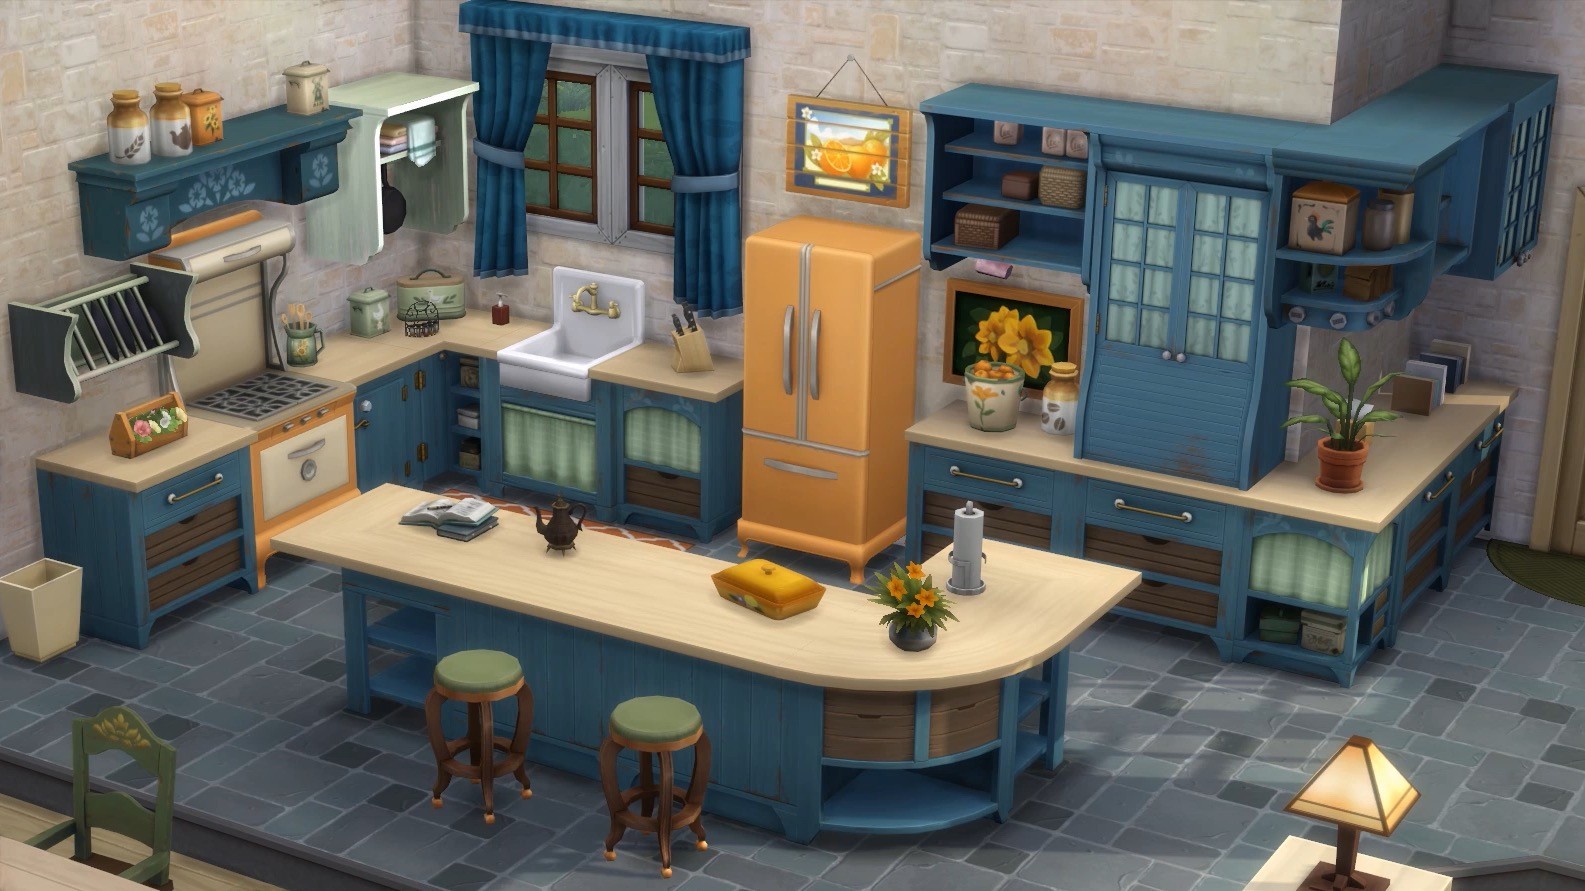 The Sims 4 - Country Kitchen Kit DLC Origin CD Key 7.59 $